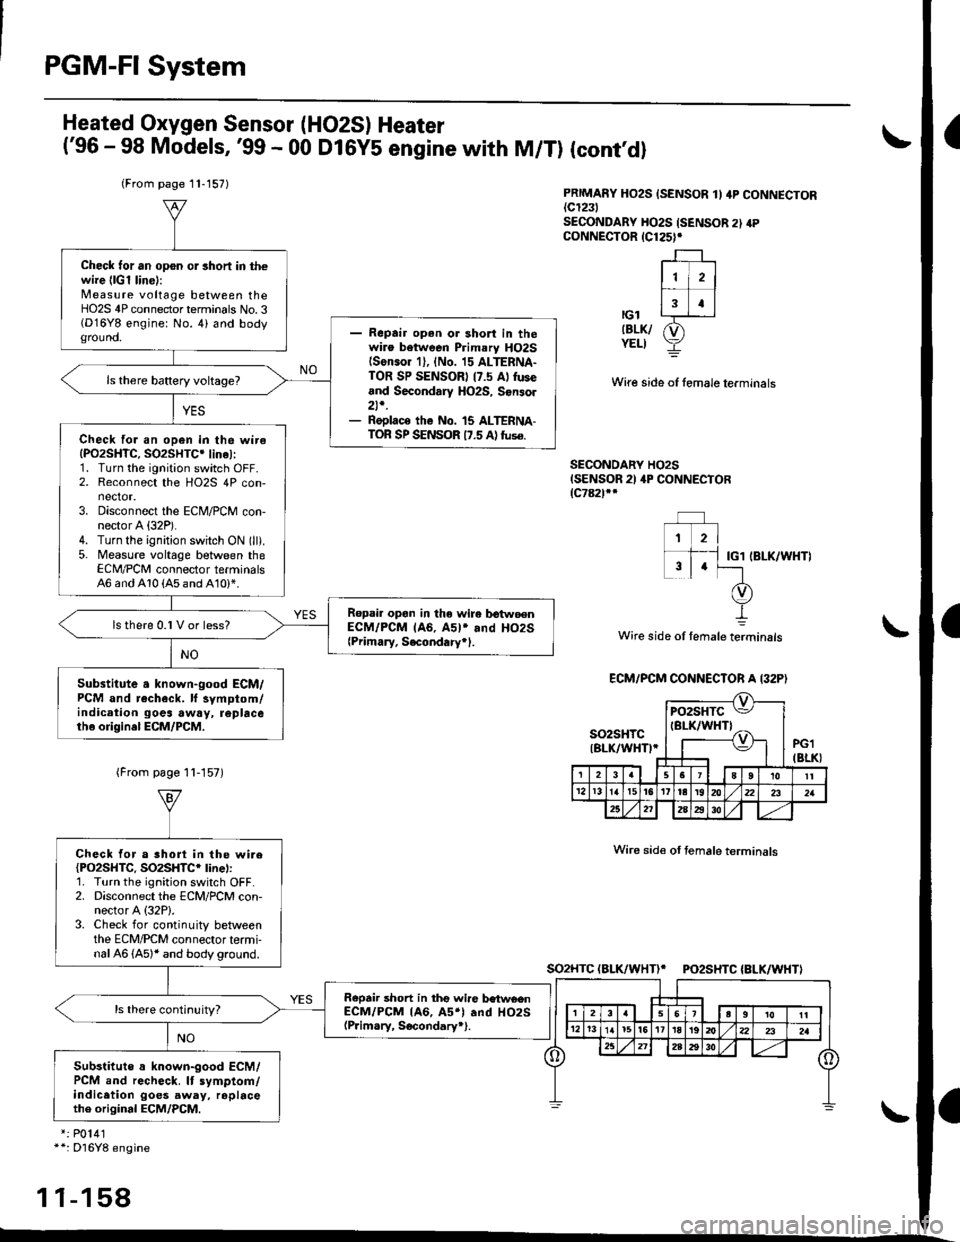 HONDA CIVIC 1999 6.G Workshop Manual PGM-FI System
a
a
Heated Oxygen Sensor (HO2S) Heater
(96 - 98 Models,99 - 00 D16Y5 engine with M/T) (contdl
PRIMARY HO2S {SENSOR 1I 4P CONNECTOR{c1231SECONDARY HO2S {SENSOR 2} 4PcoNNECTOR 1C125)r
r